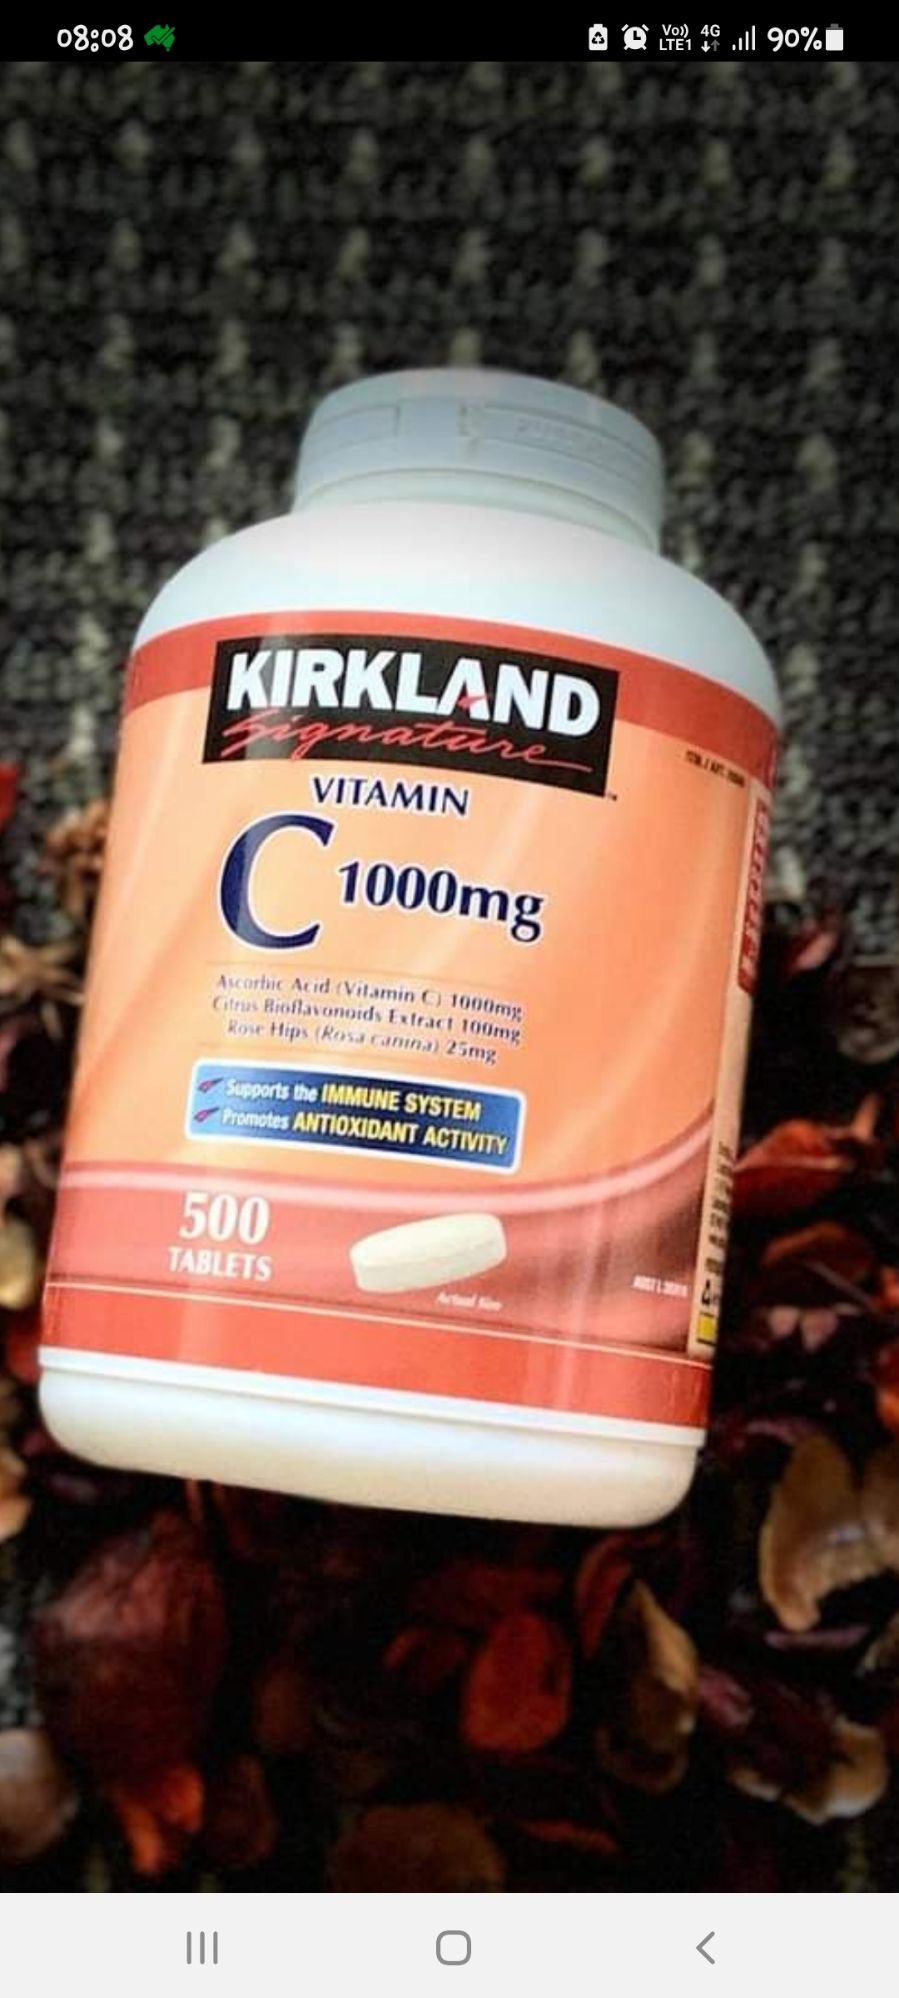 Kirkland Vitamin C 1000g 500 Tablets From Canada July 23 Expiry Lazada Ph